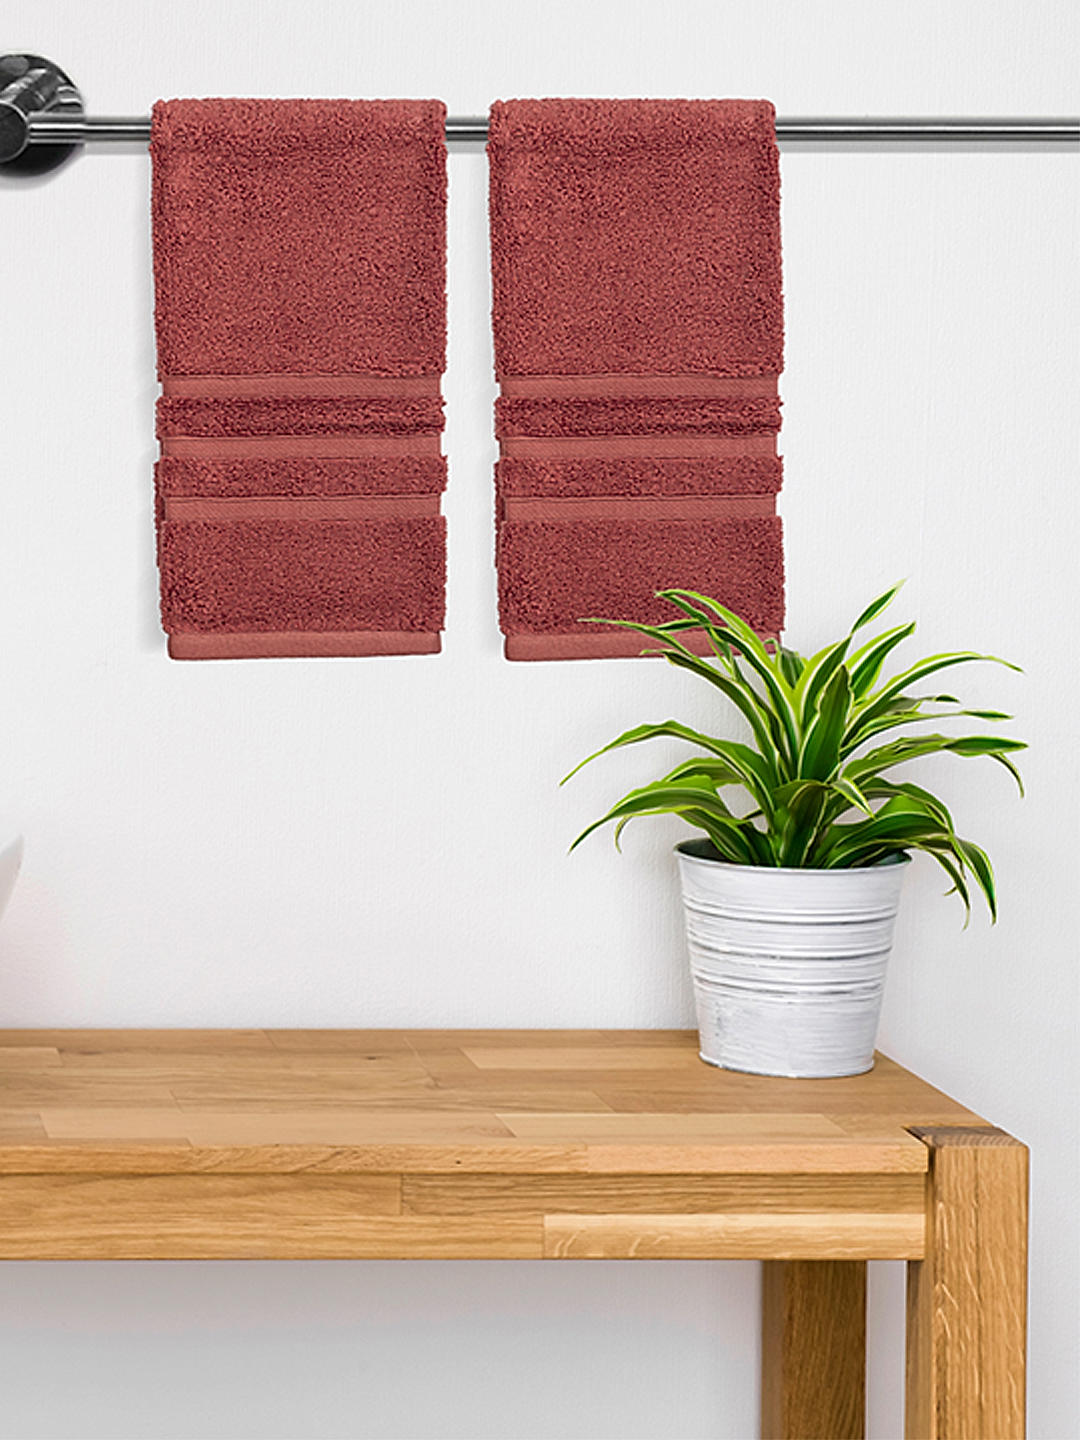 Kalpavriksha 550 gsm 100% Organic Cotton Soft & Fluffy Red Colored Hand Towel